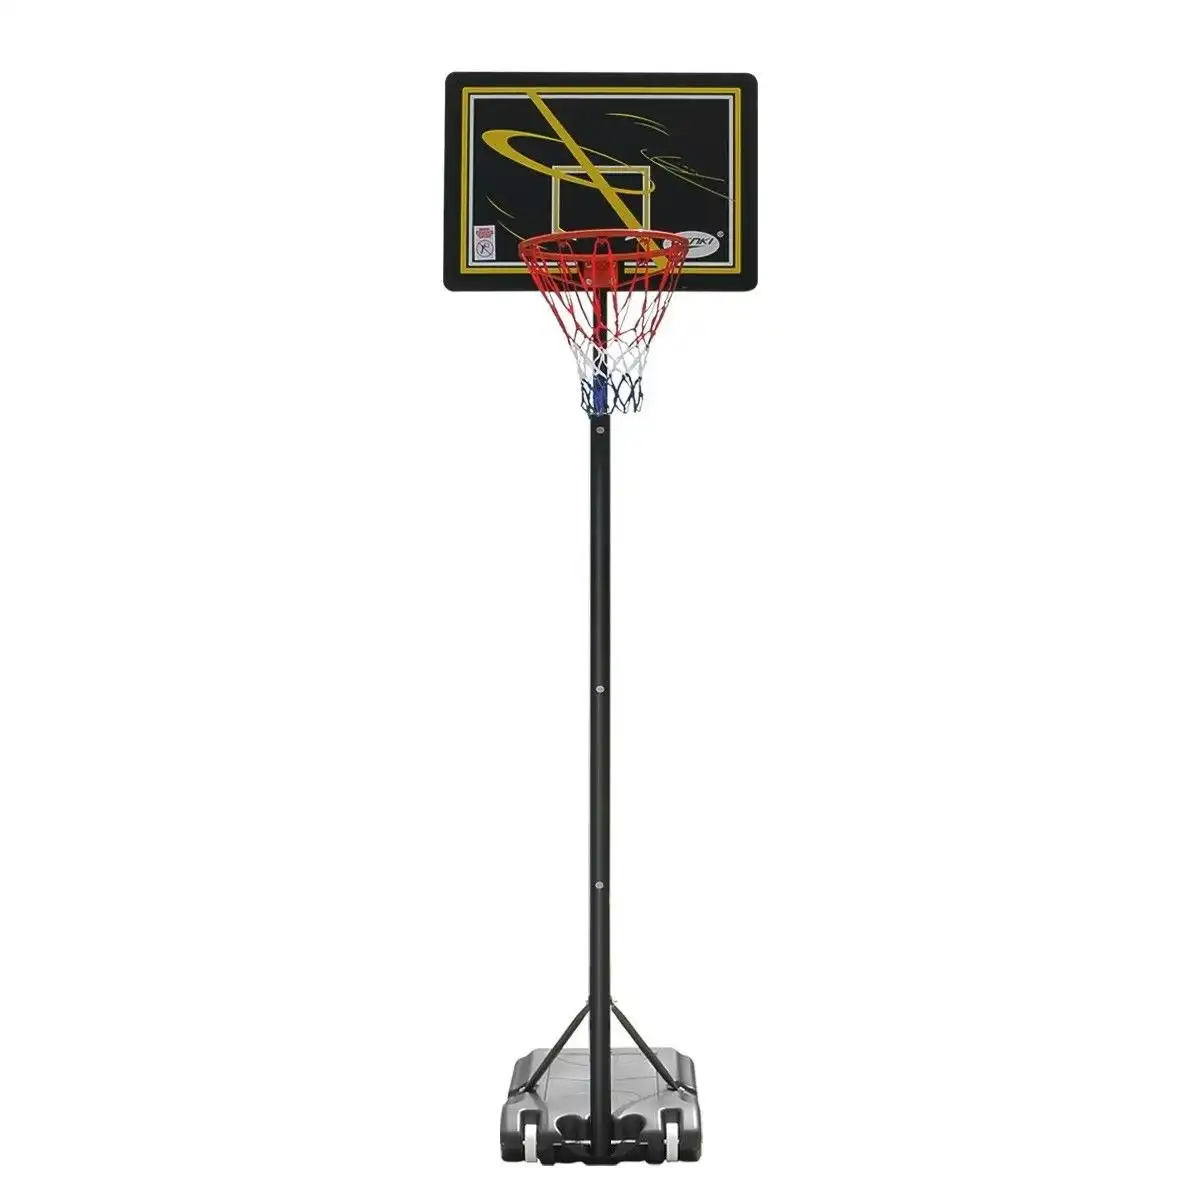 Genki 1.55-2.6m Kids Adult Portable Basketball System Hoop Stand